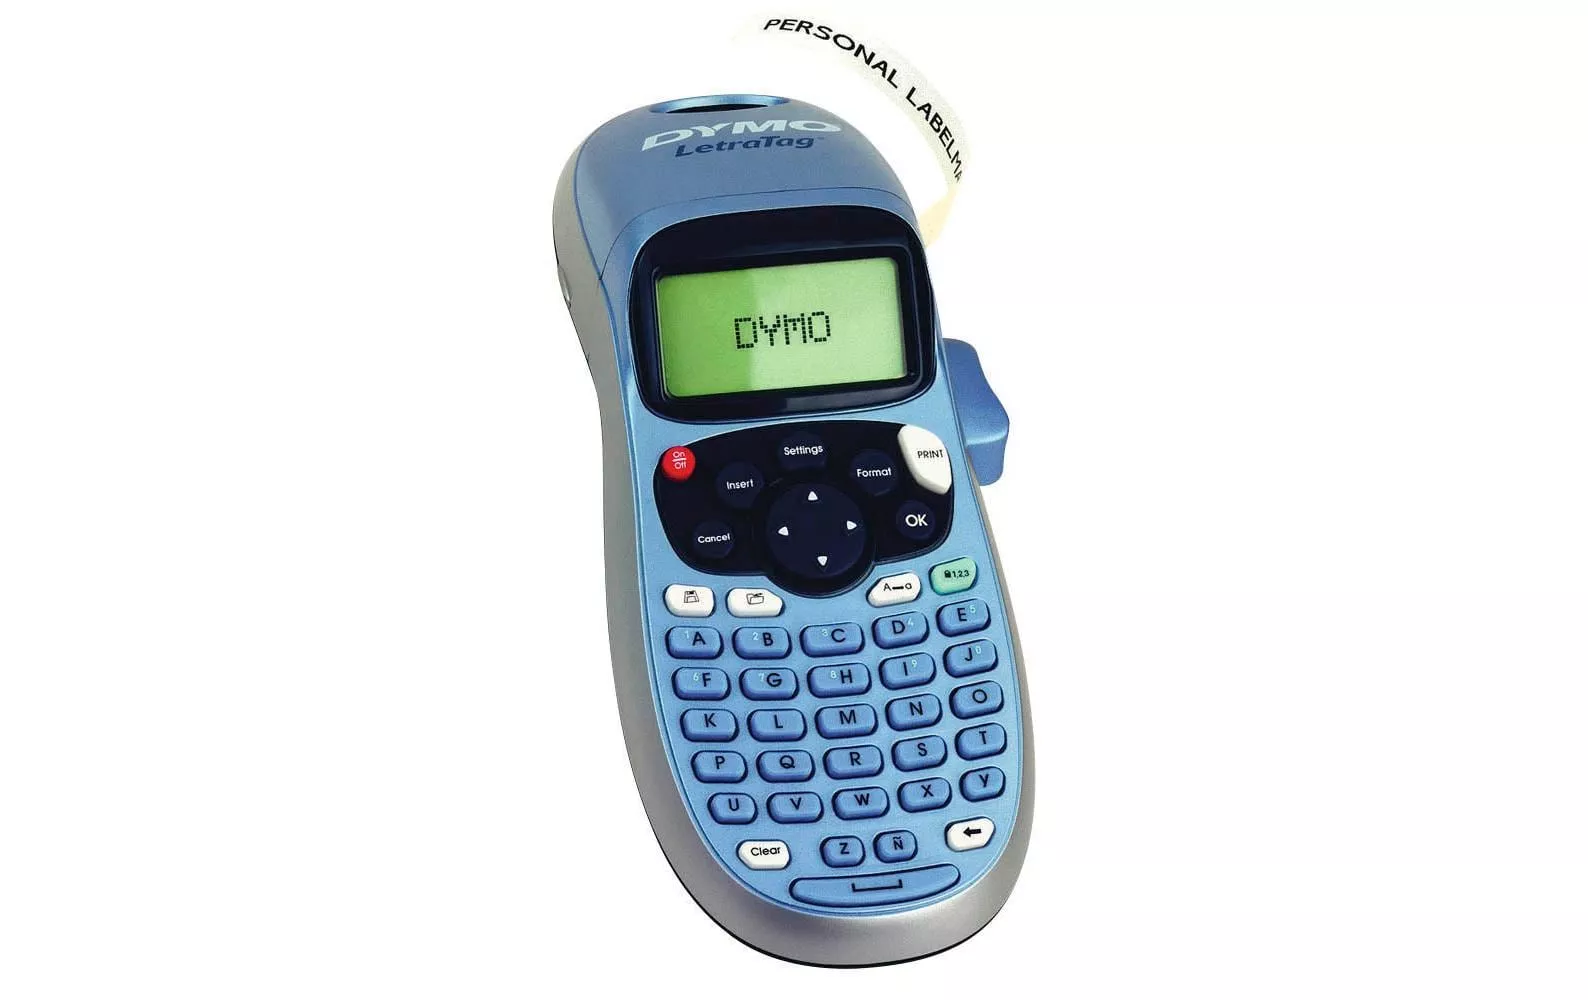 Etichettatrice portatile DYMO LT-100H